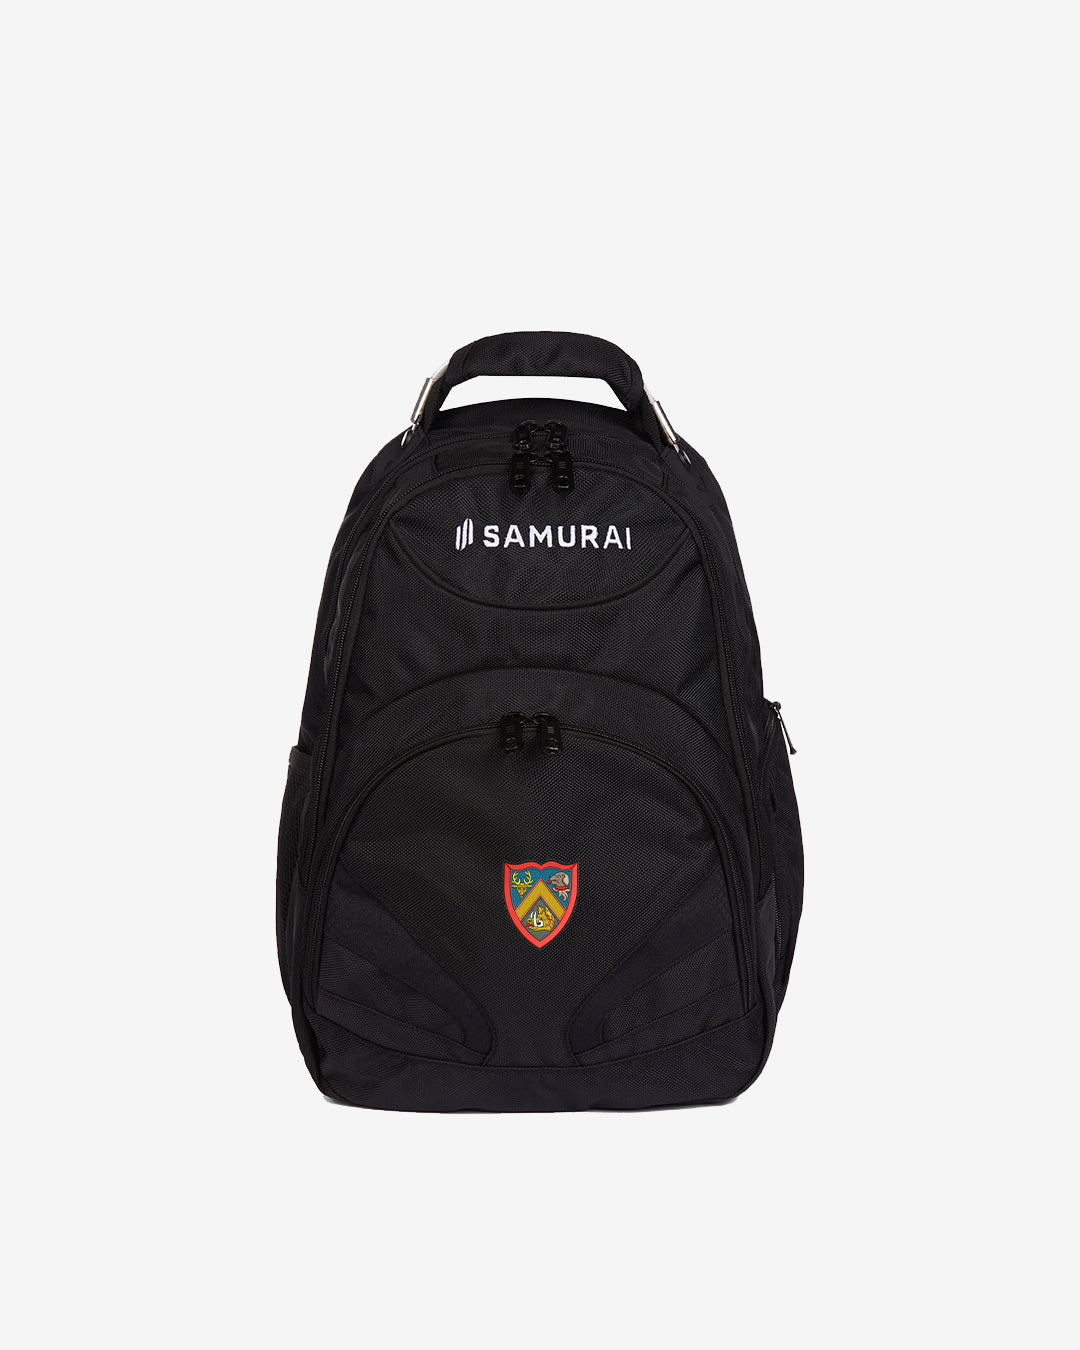 Trinity Academicals RFC - U:0213 - Backpack - Black